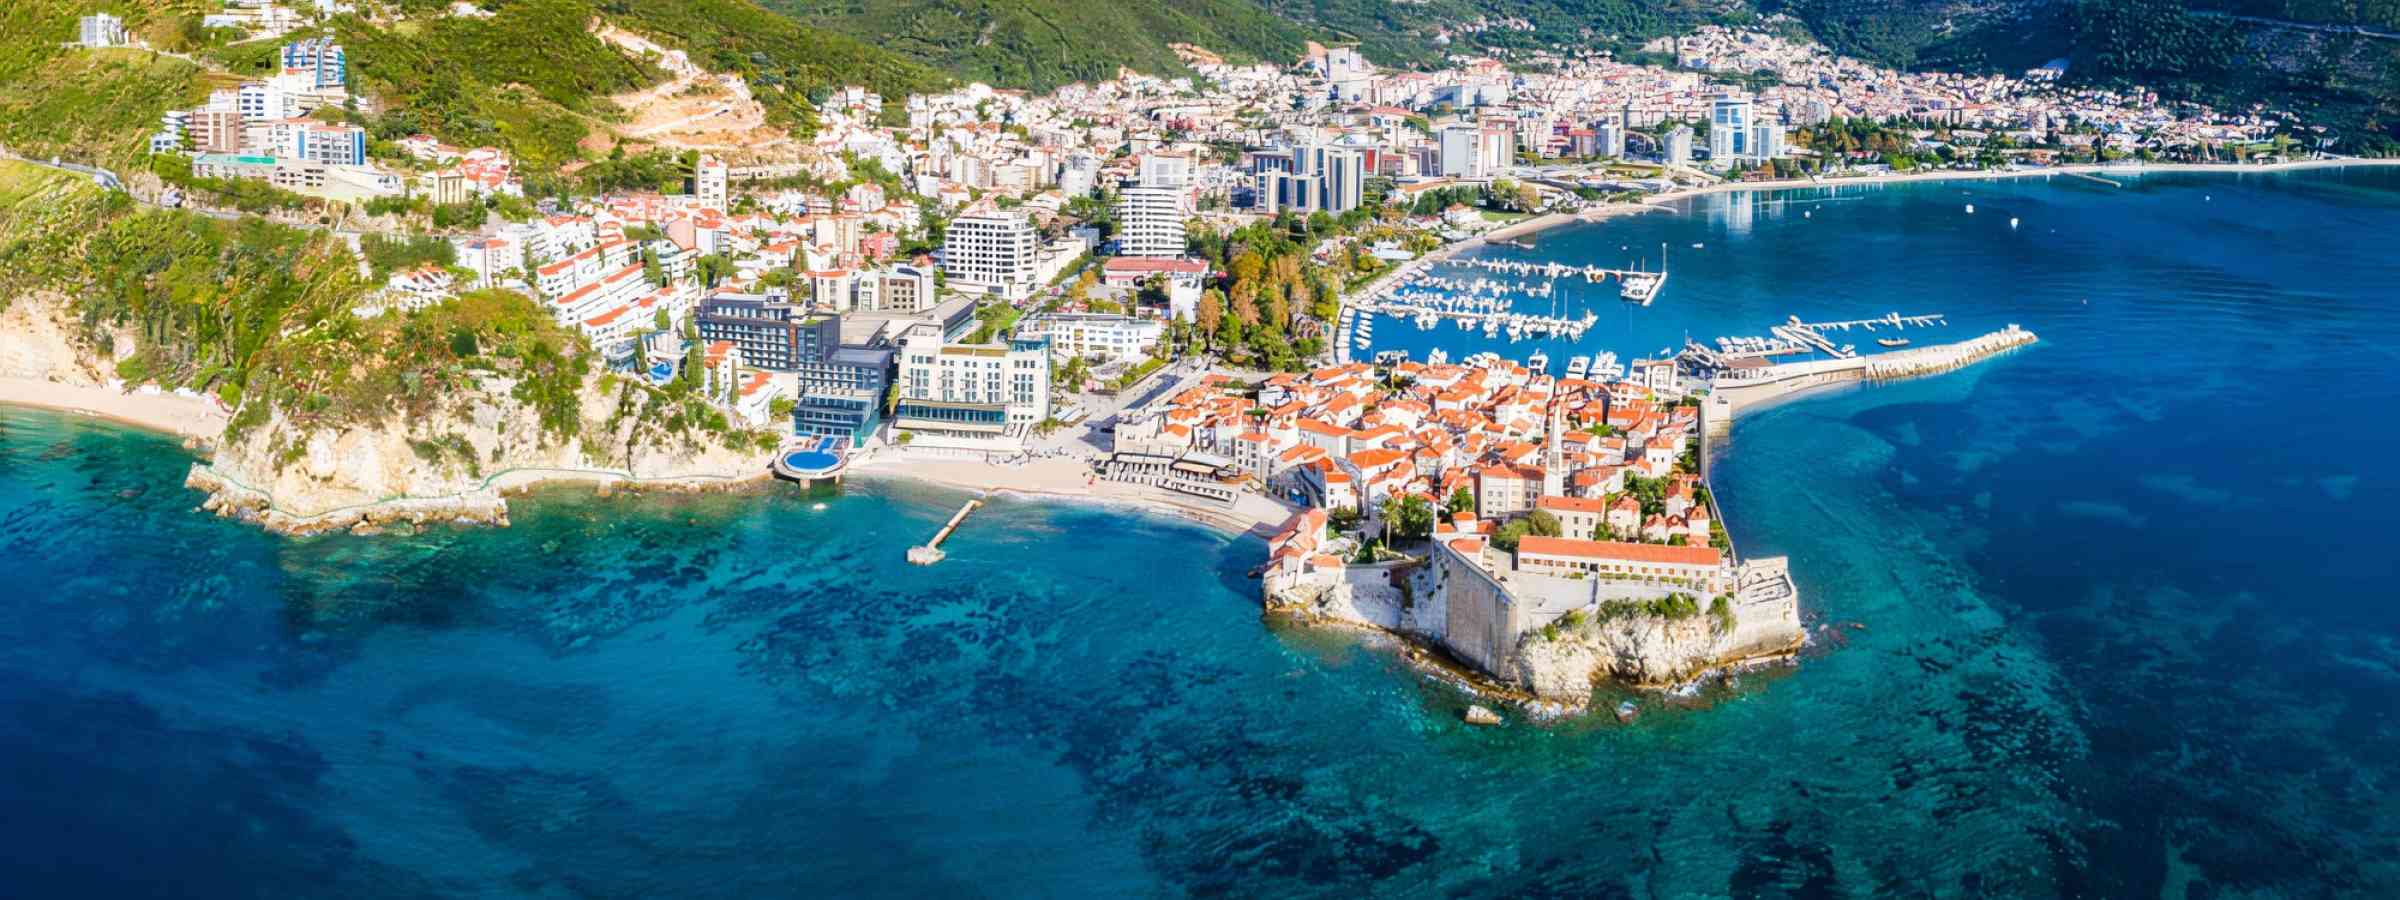 Budva, Montenegro from the air.